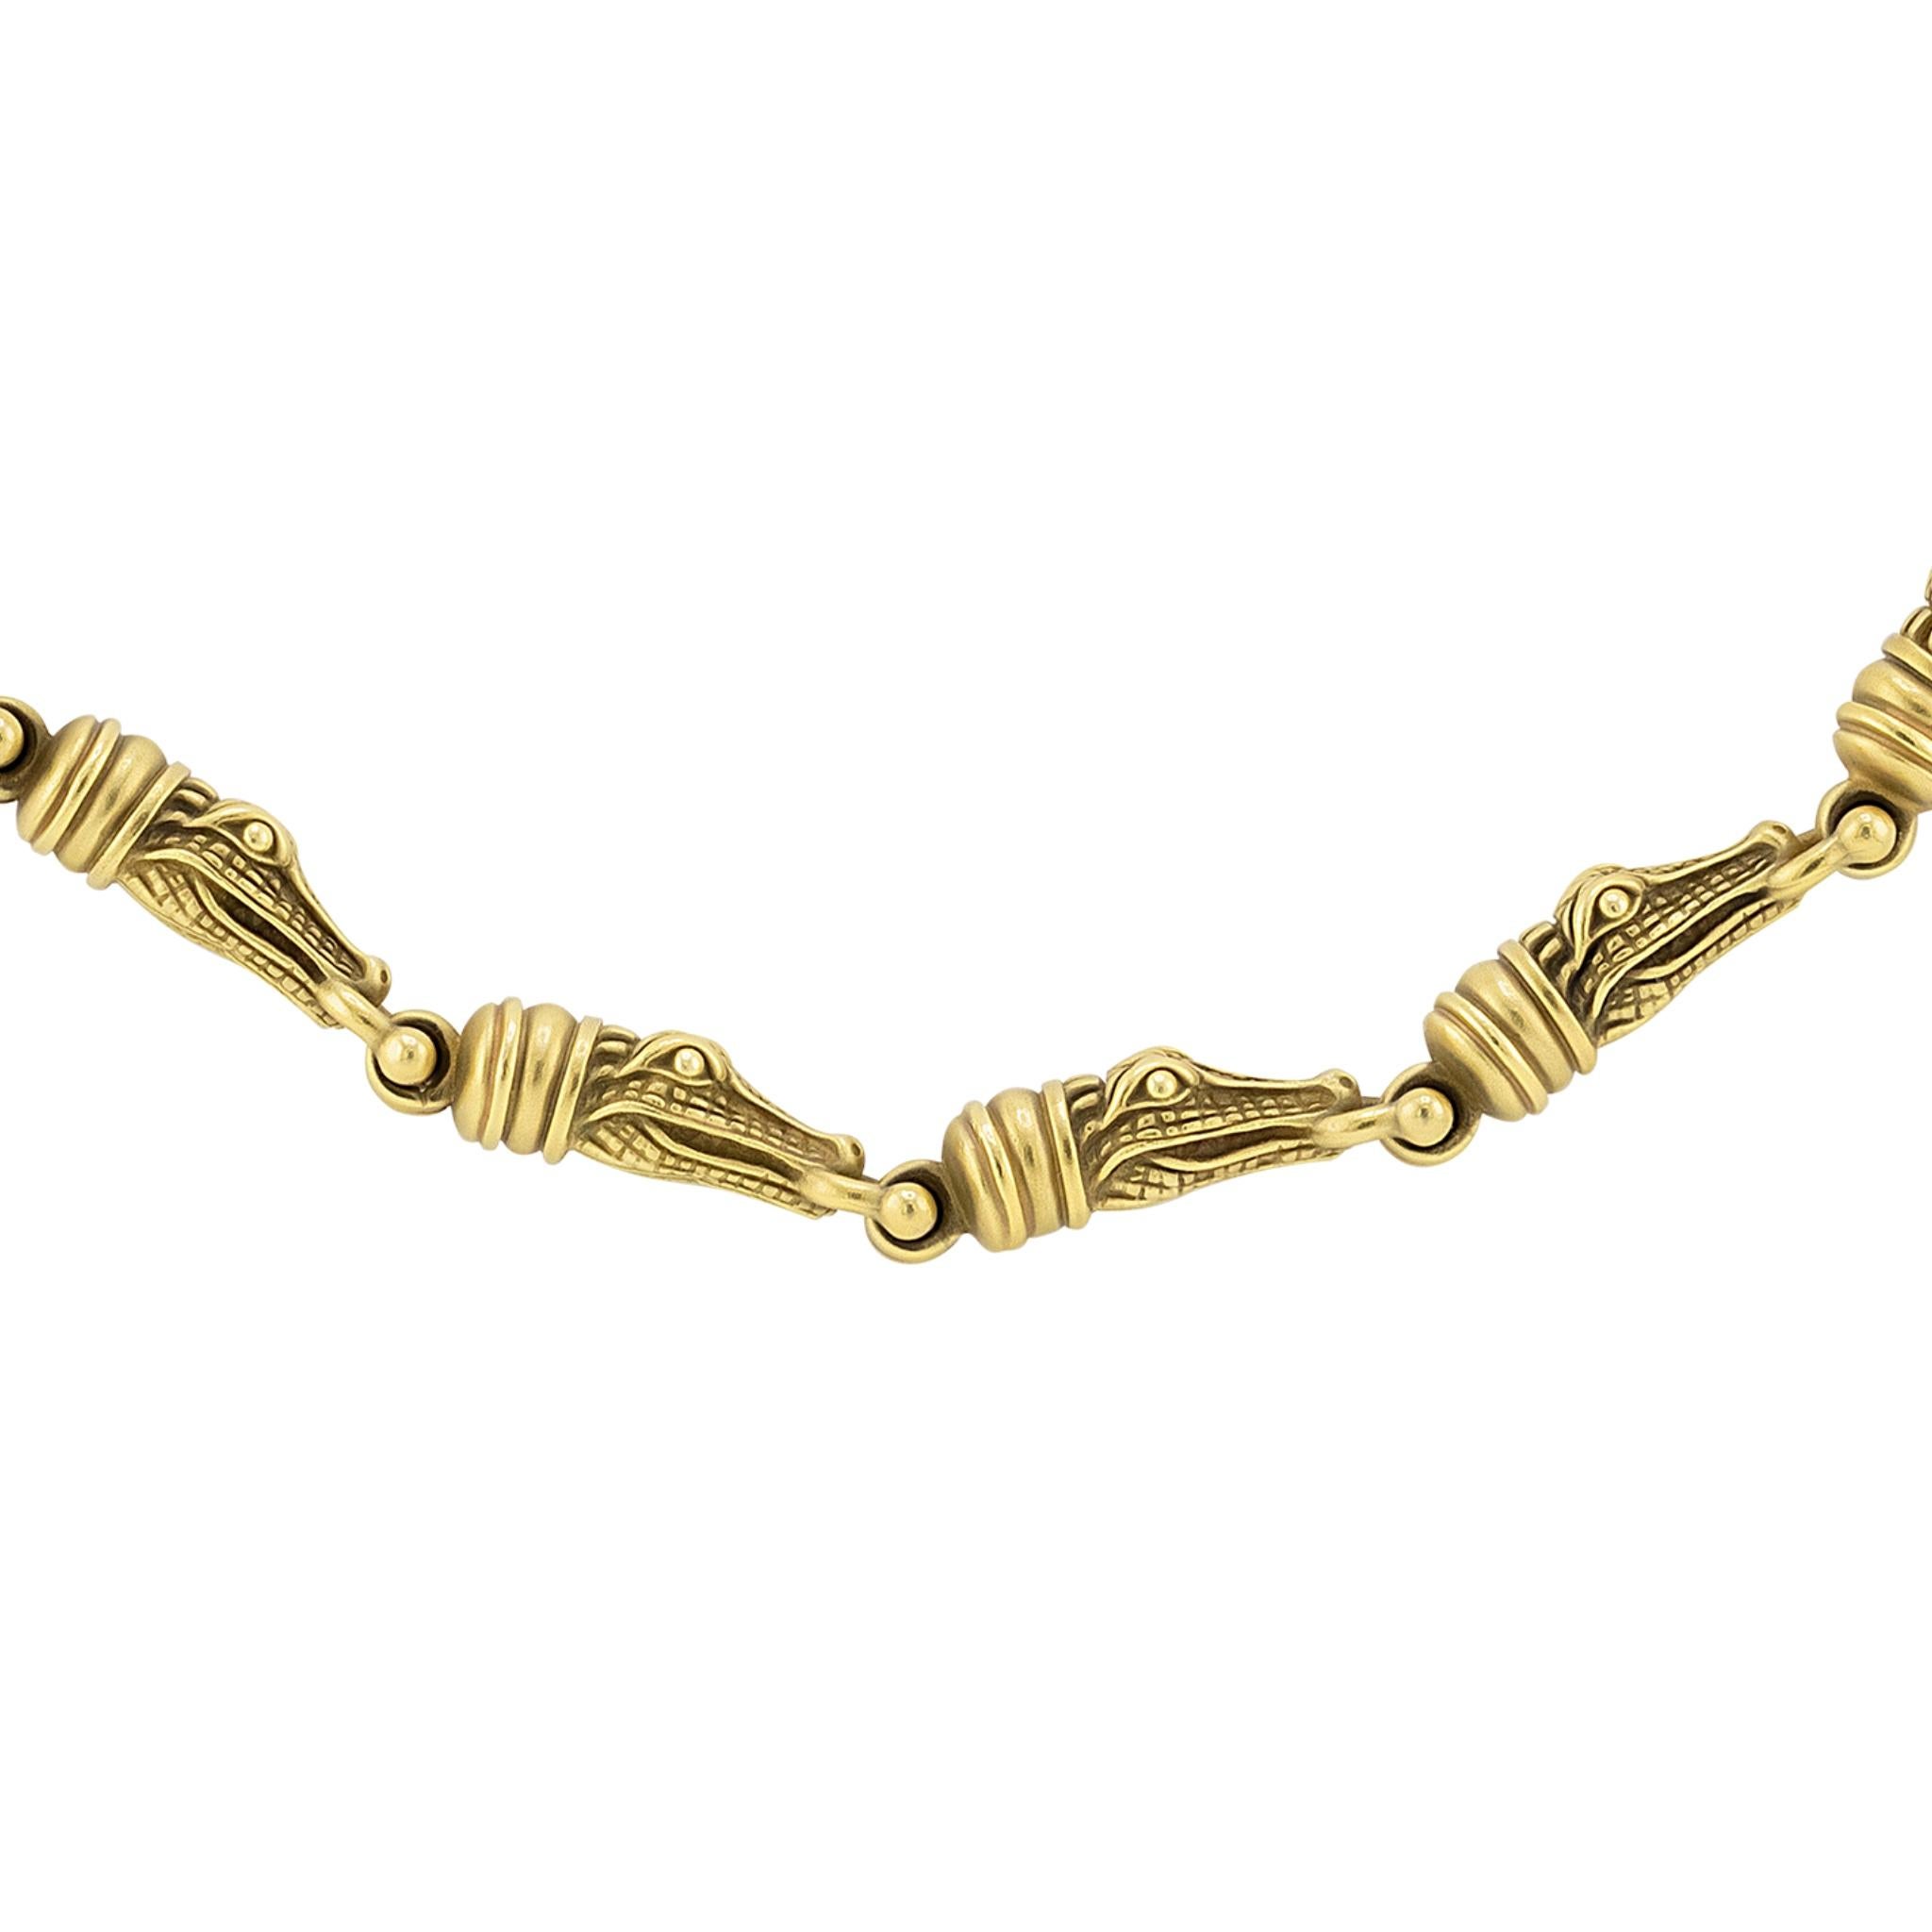 alligator clasp necklace